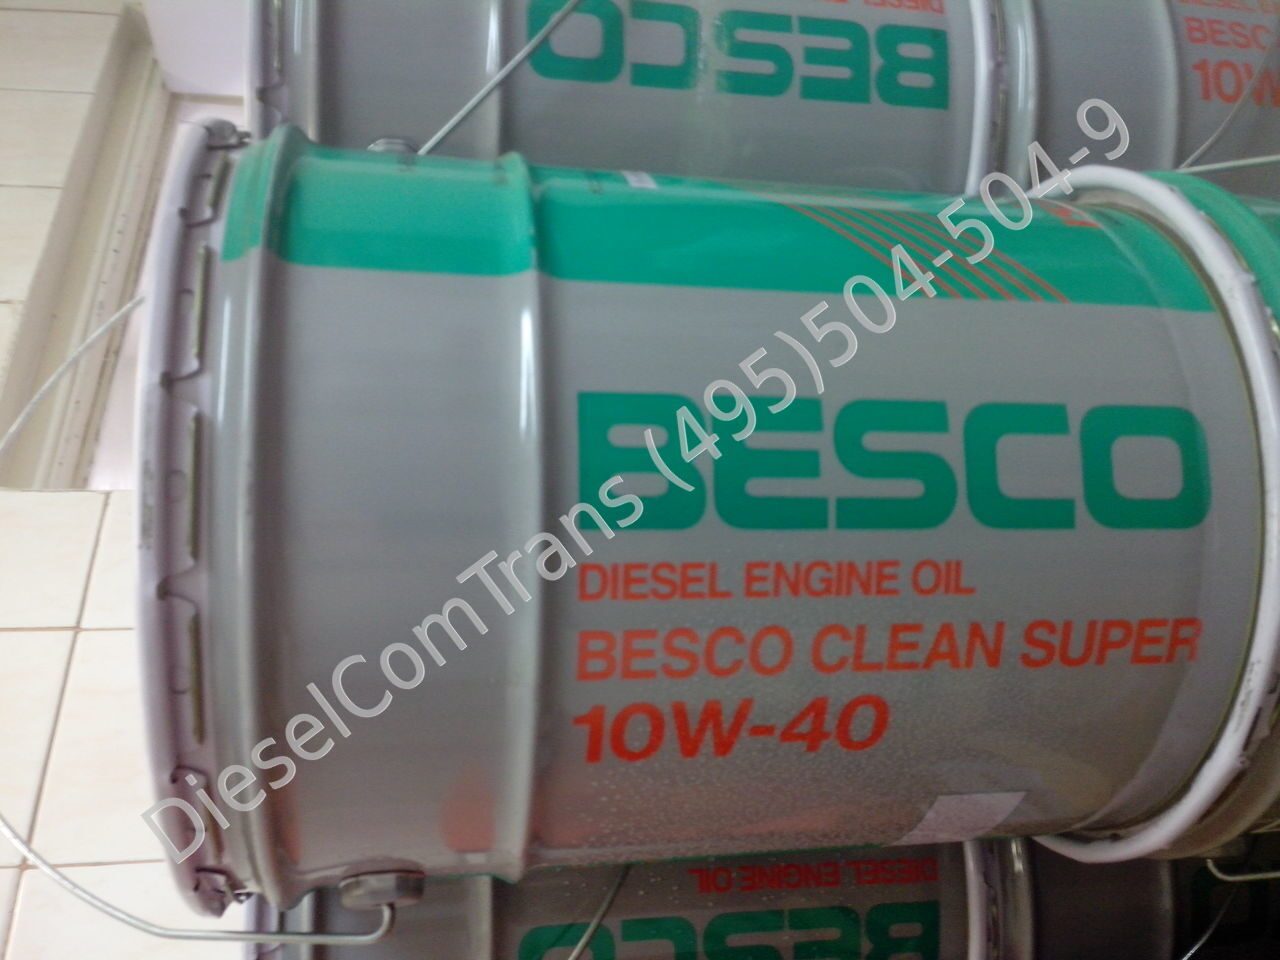 Исузу масло двигатель. Isuzu Besco clean super 10w 40. Масло Besco 10w 40. Isuzu 1884058020. Моторное масло Isuzu Besco 10w 40.